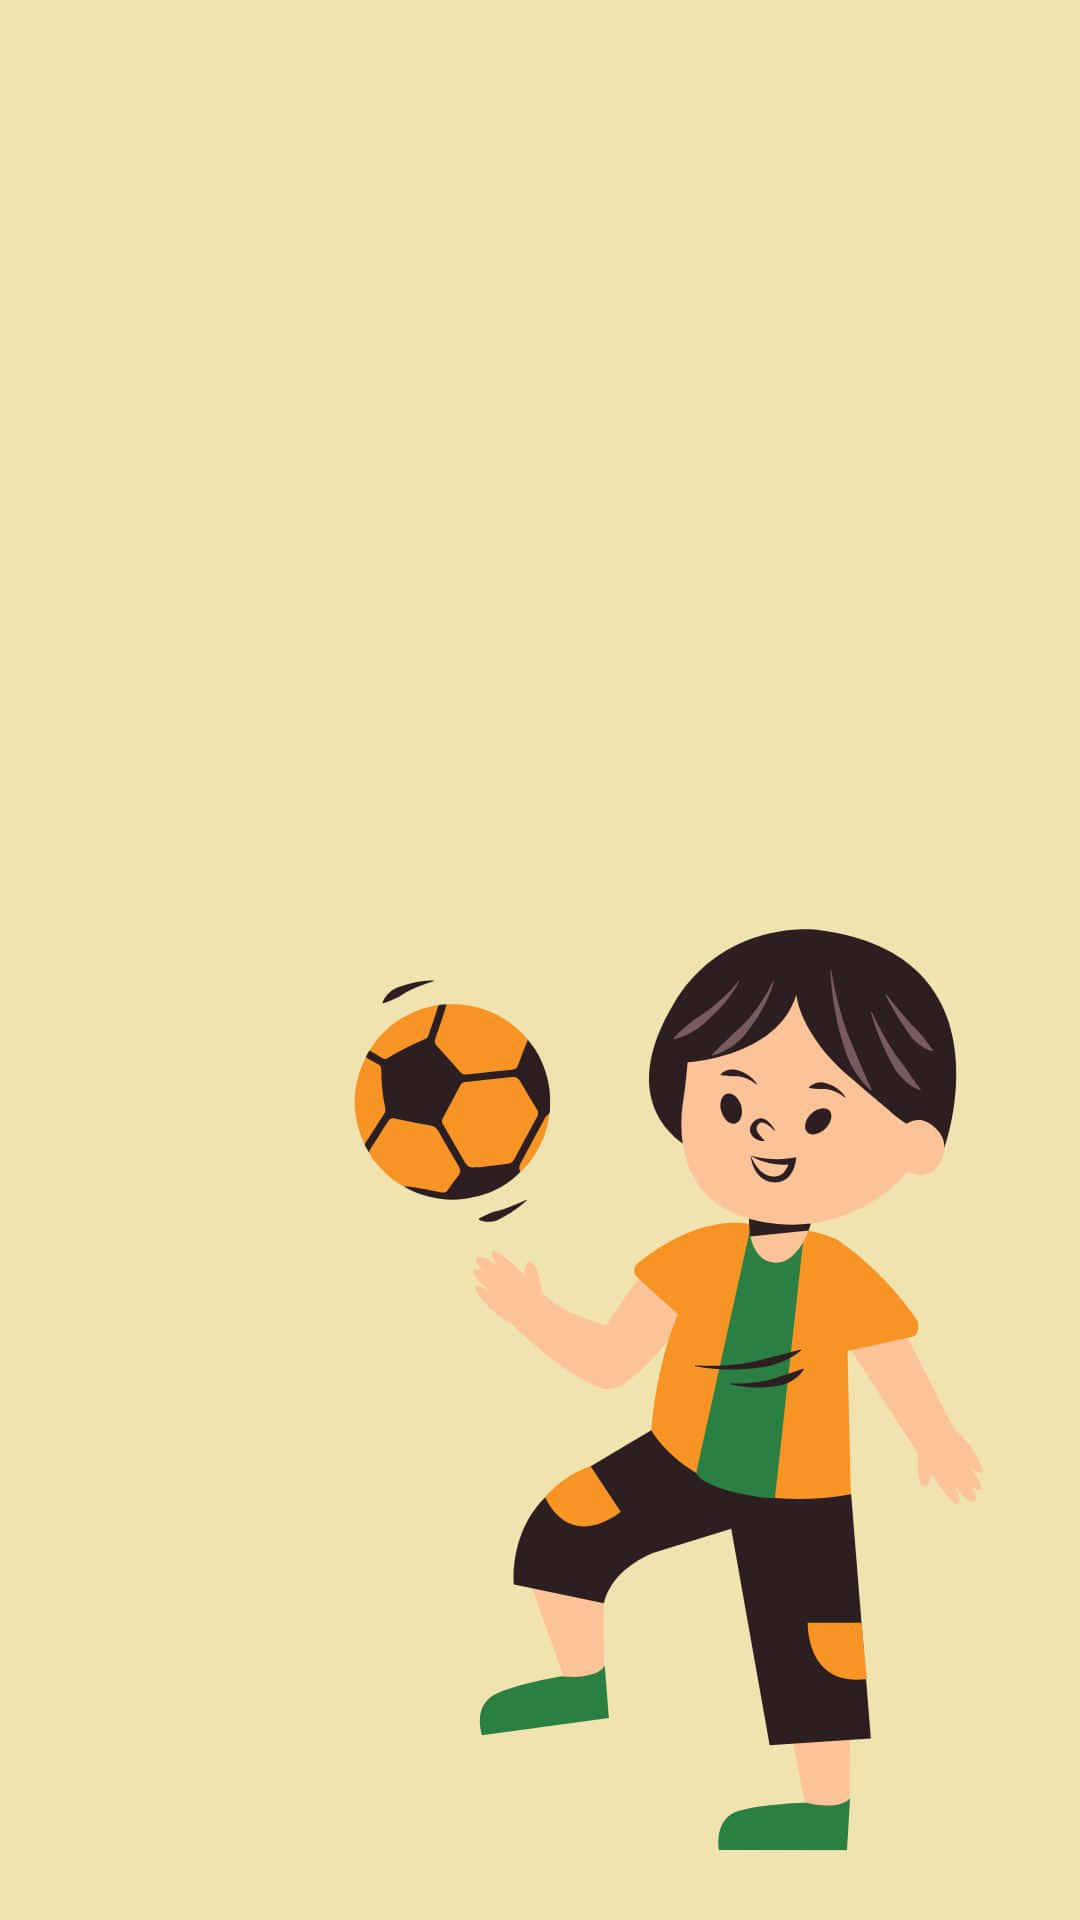 Handsome Boy Cartoon Playing Soccer Ball